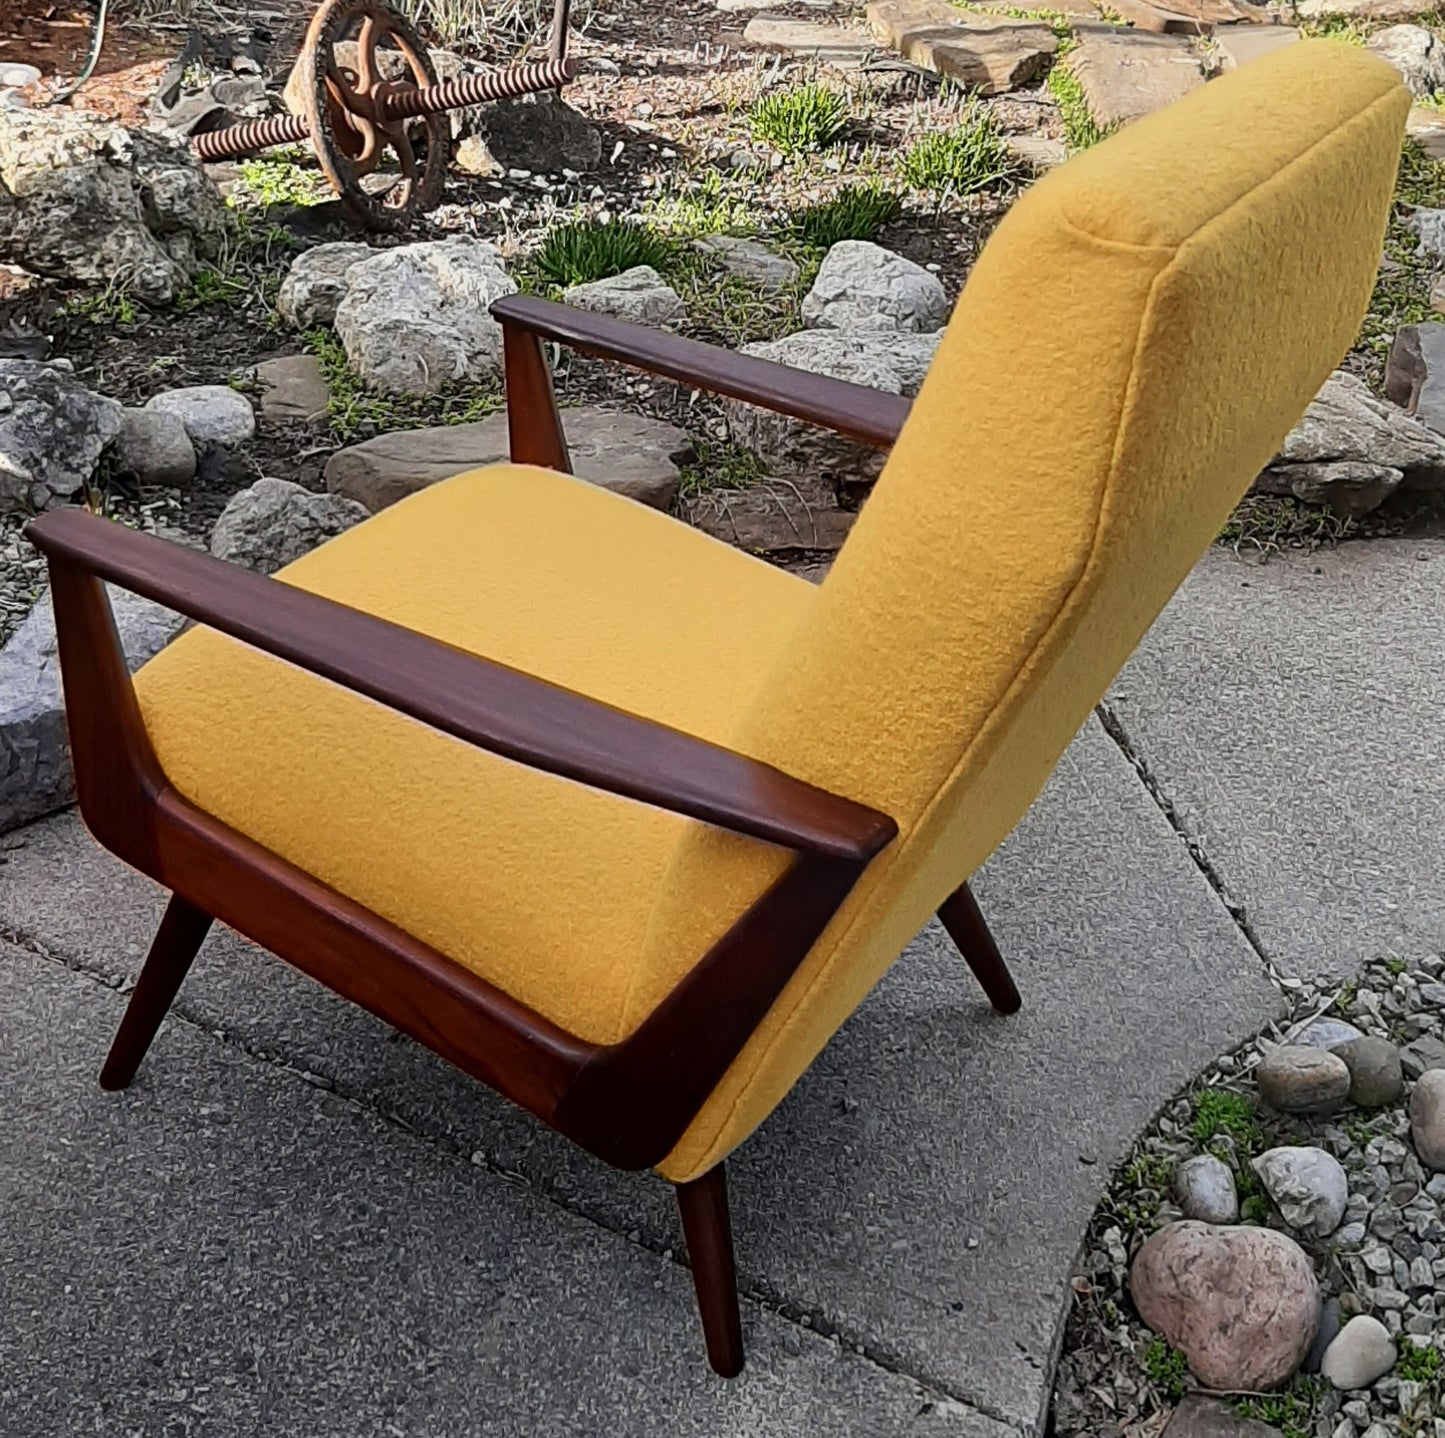 REFINISHED REUPHOLSTERED Danish Mid-Century Modern Teak Lounge Chair